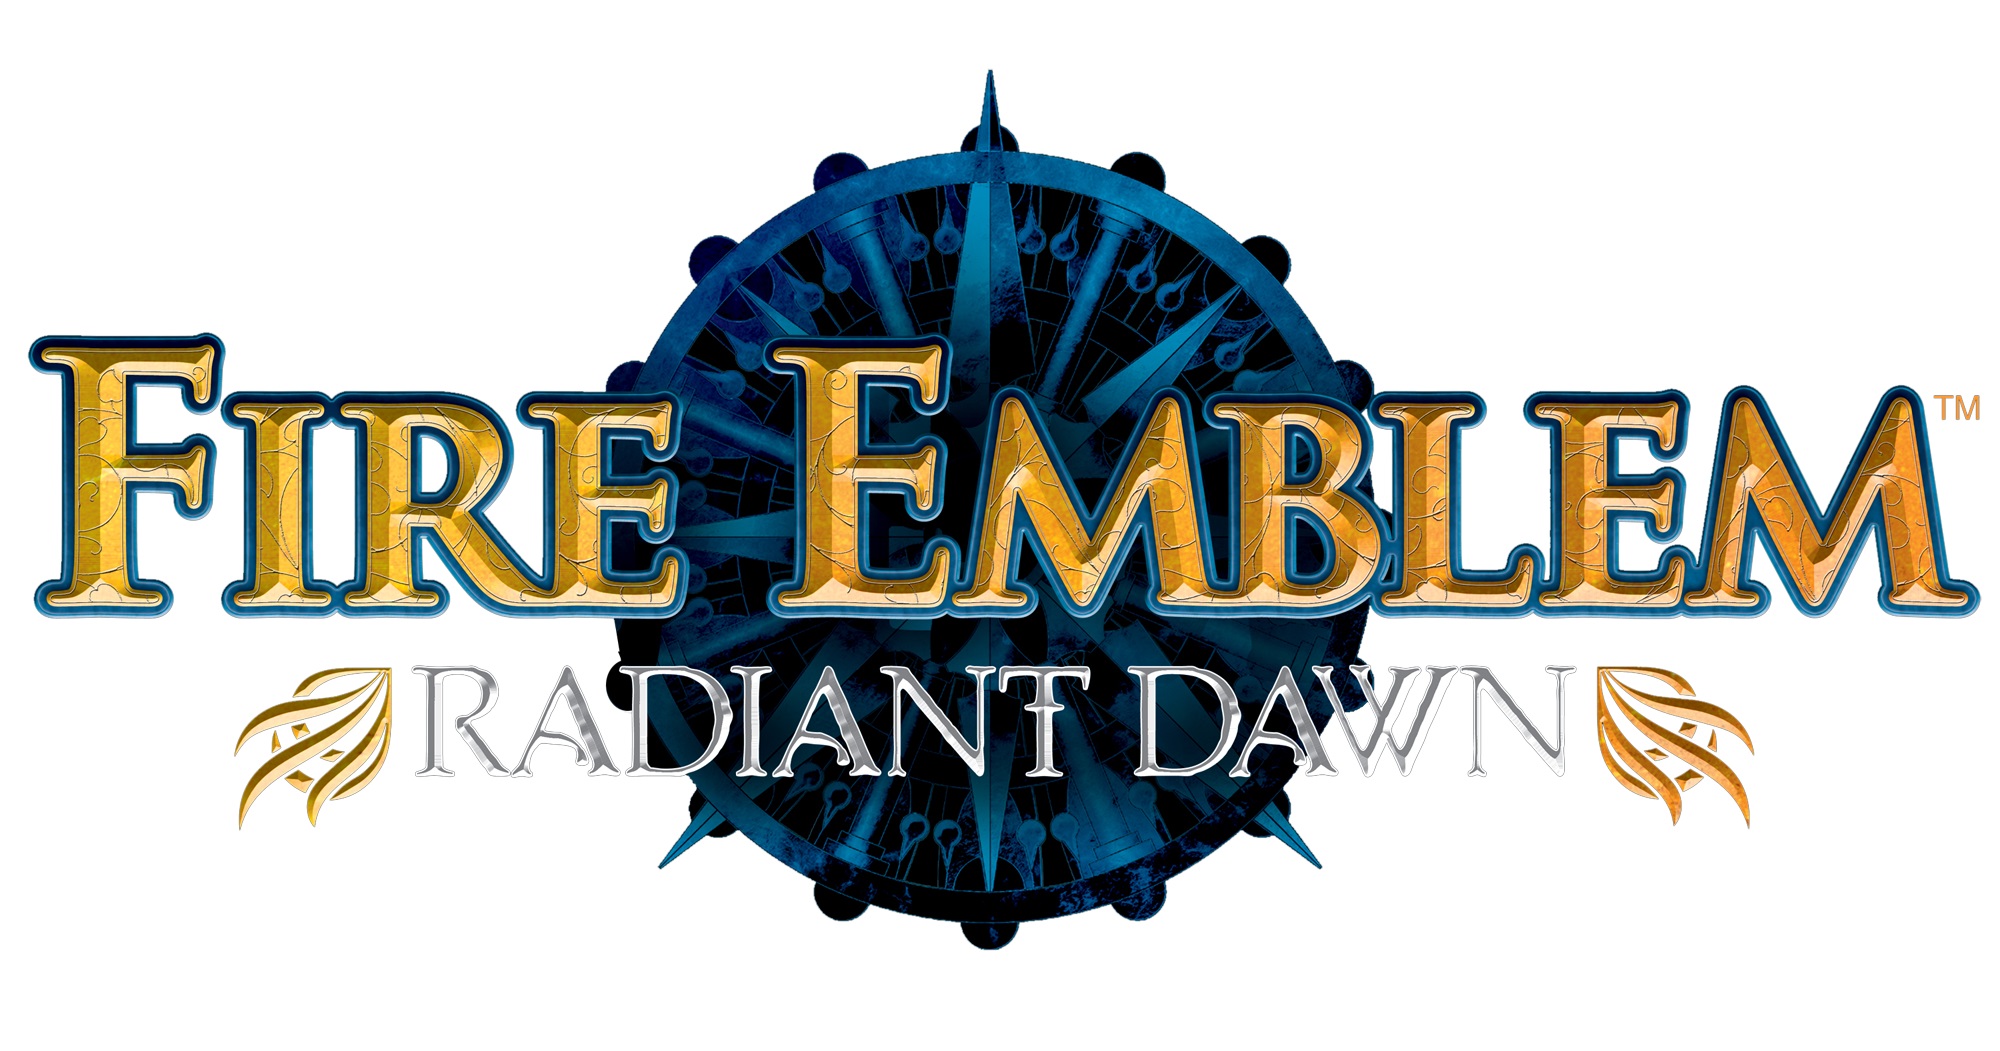 fire emblem radiant dawn characters